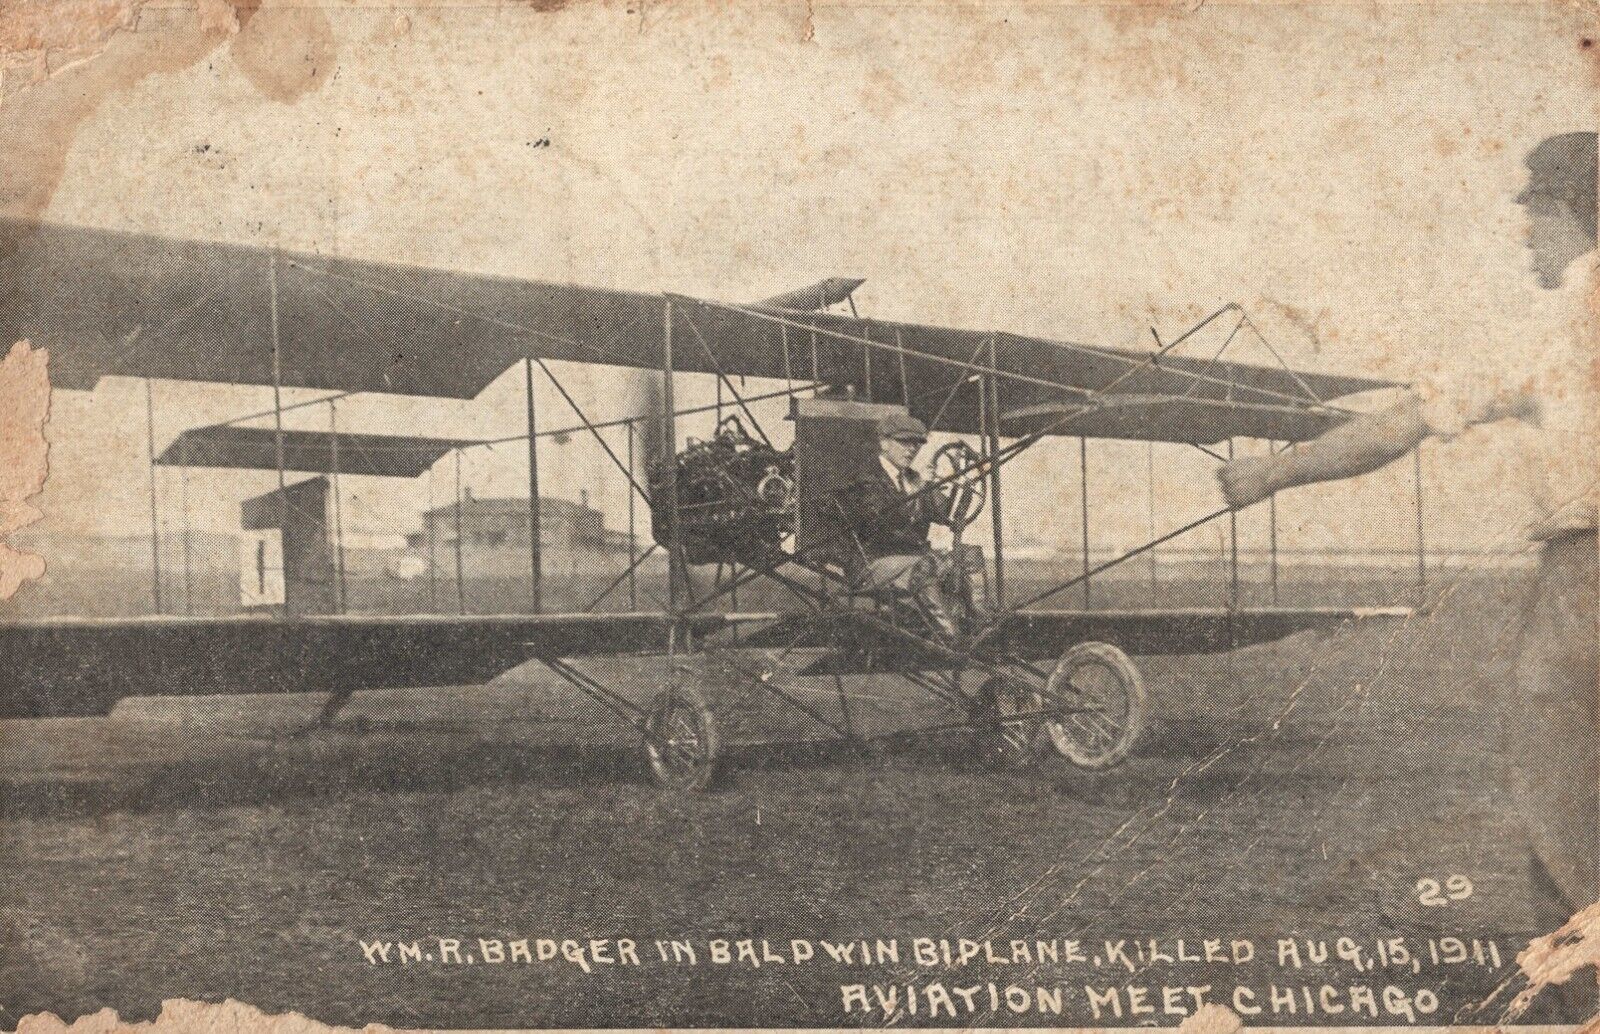 William R Badger Baldwin Biplane Killed 1911 Chicago Aviation Airplane Postcard